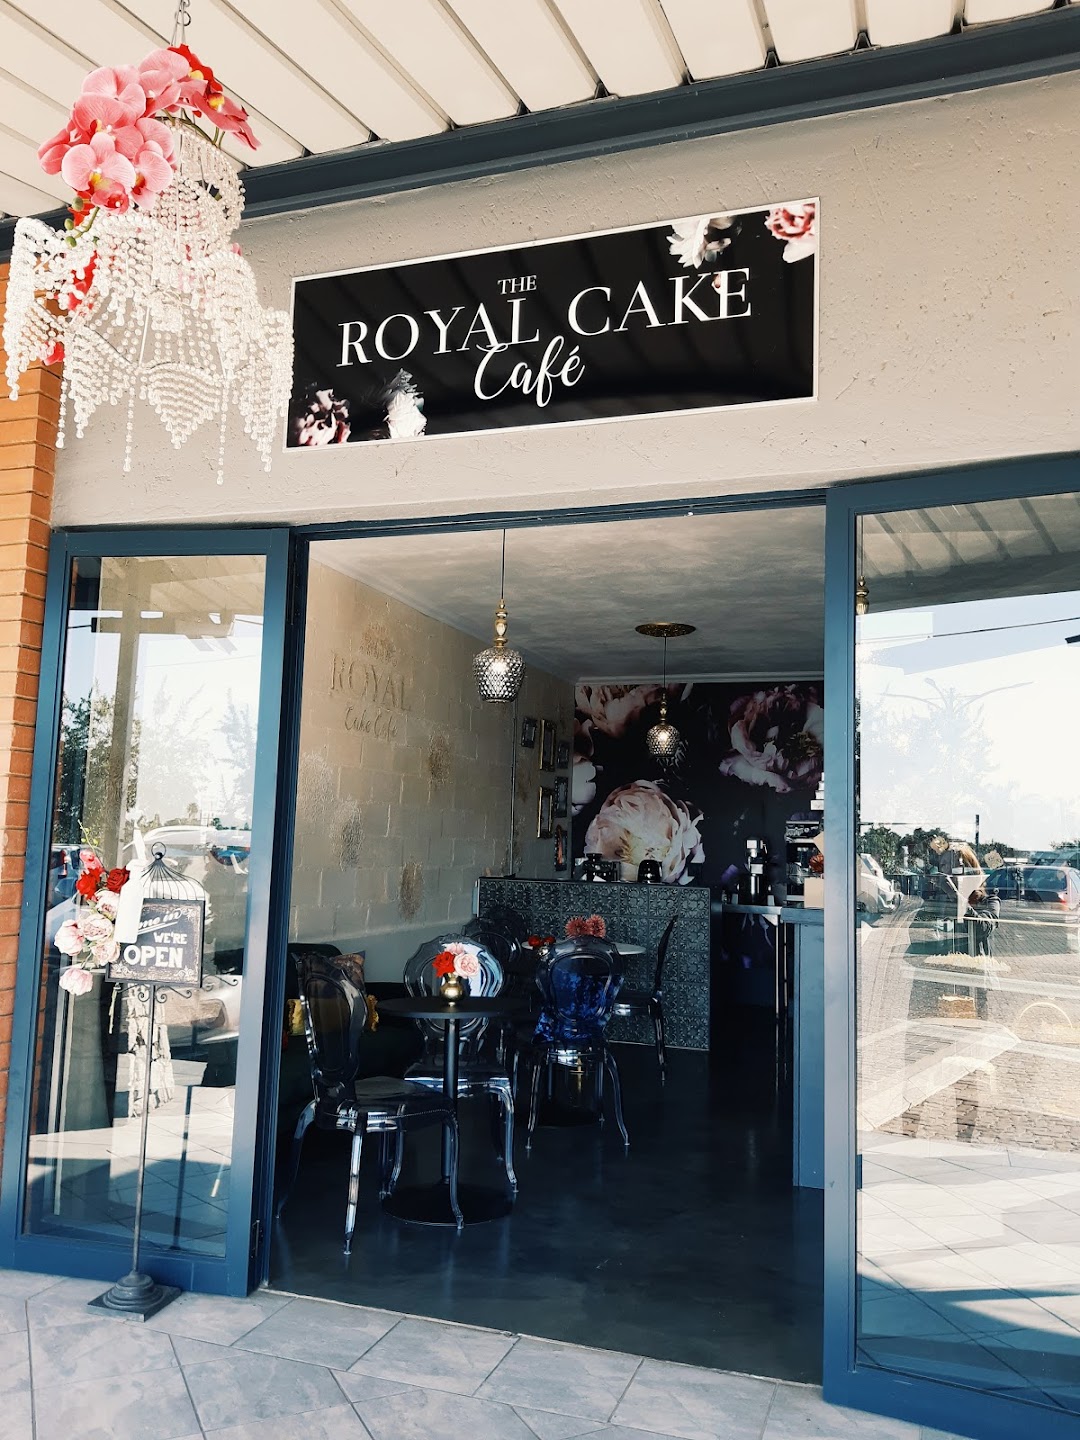 The Royal Cake Caf